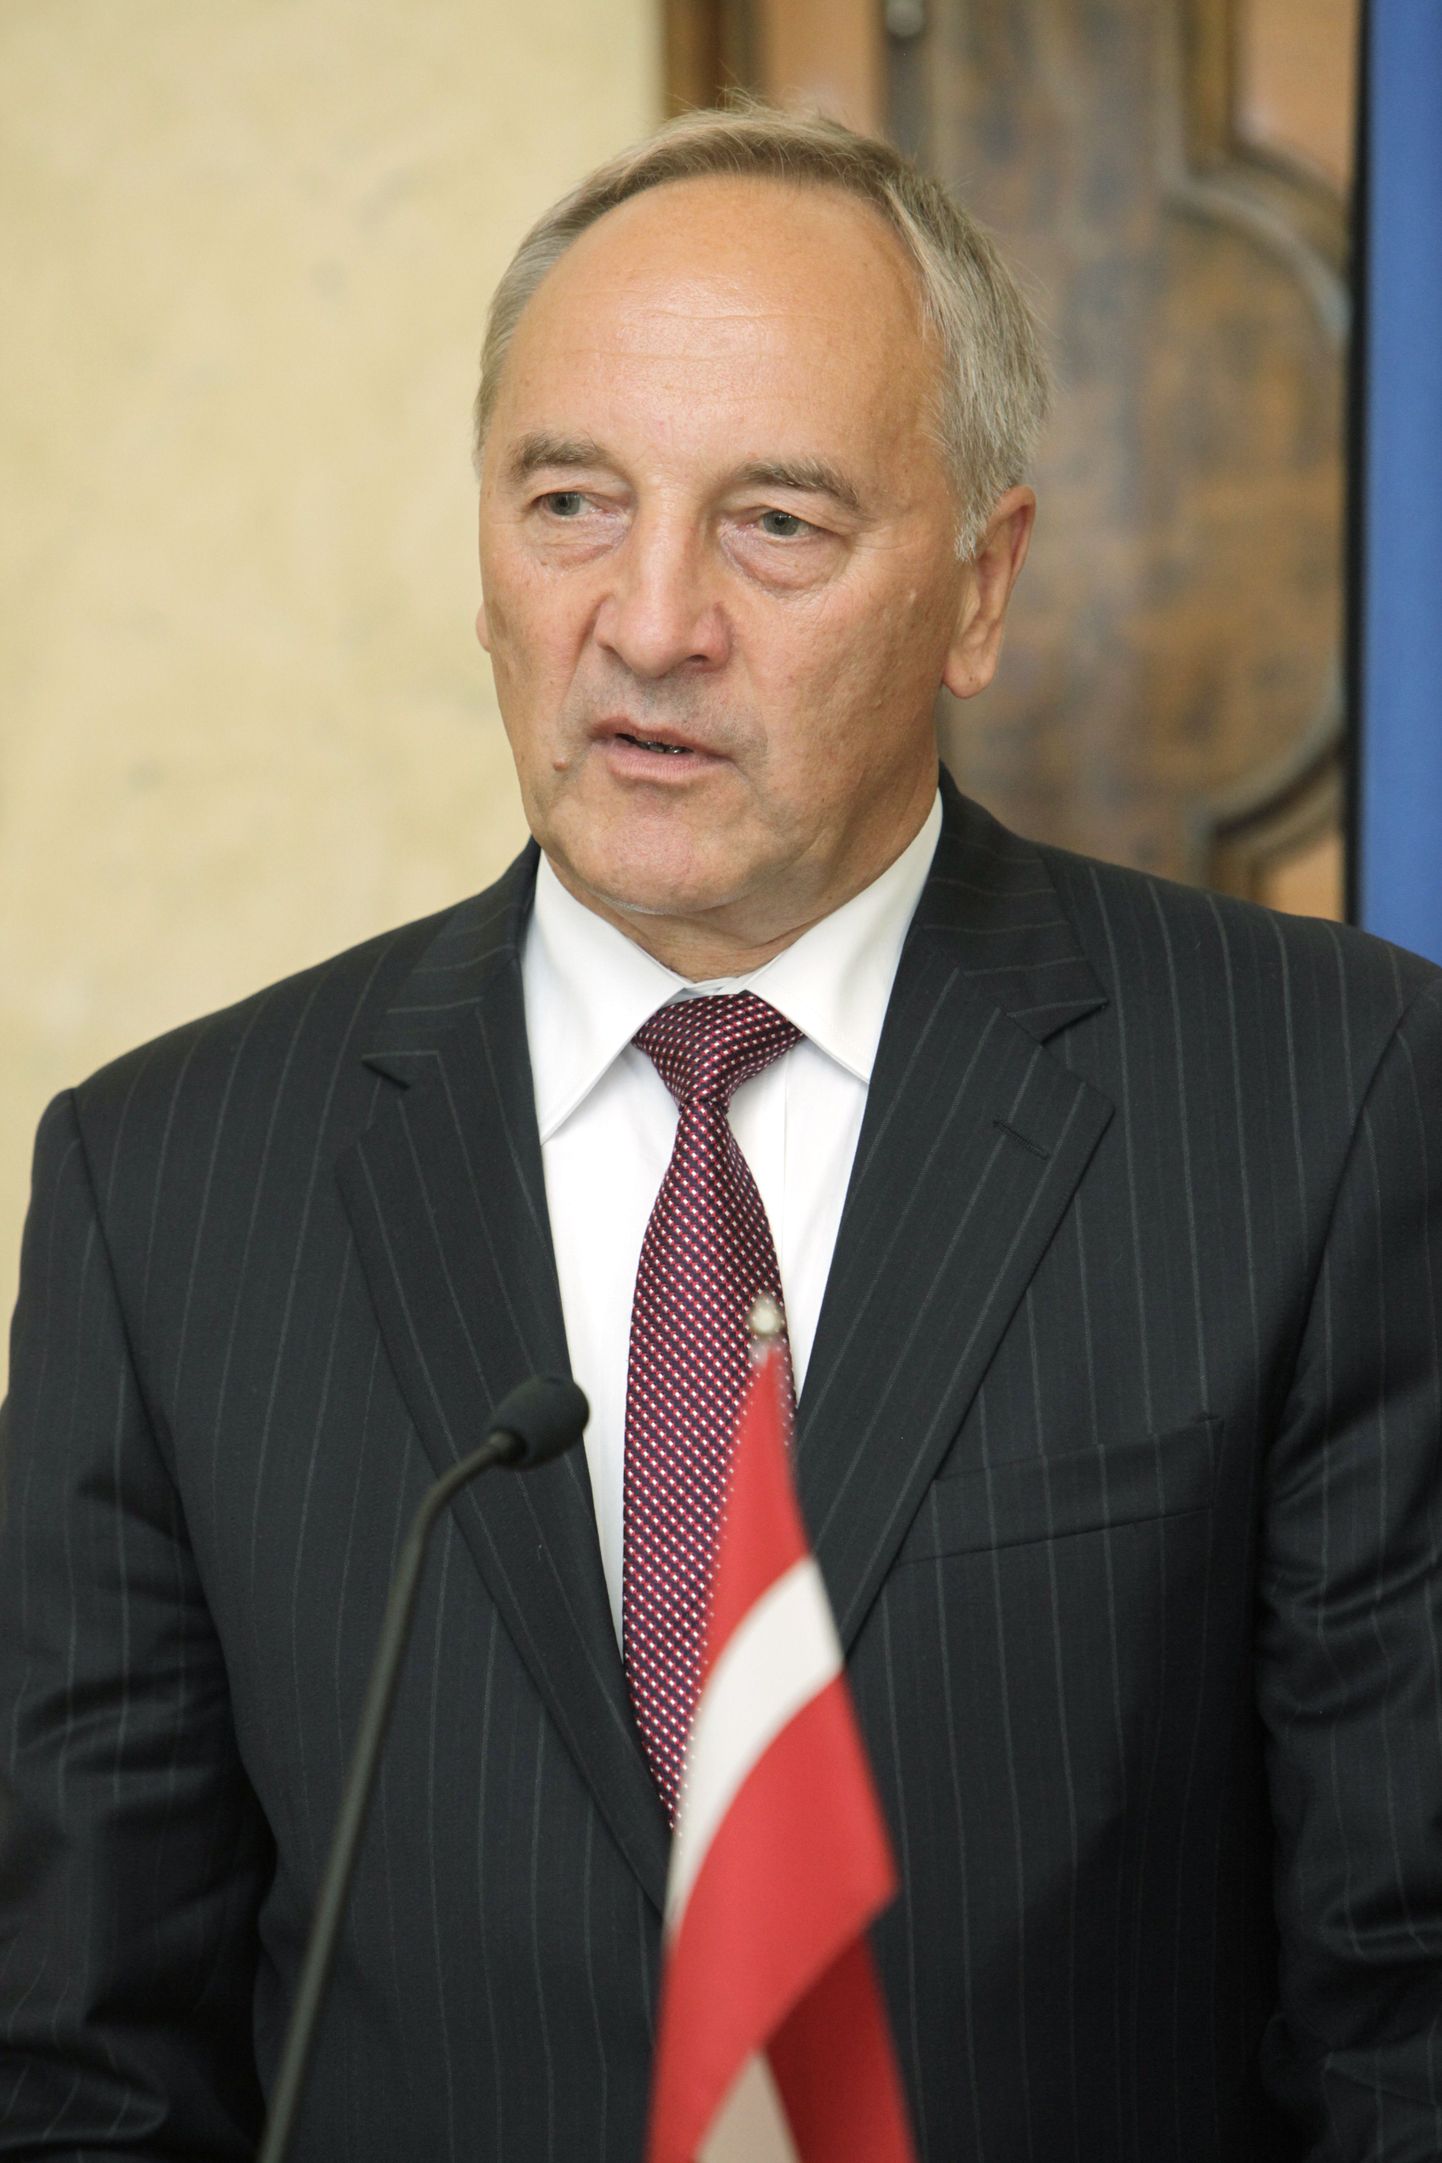 Läti president Andris Bērziņš